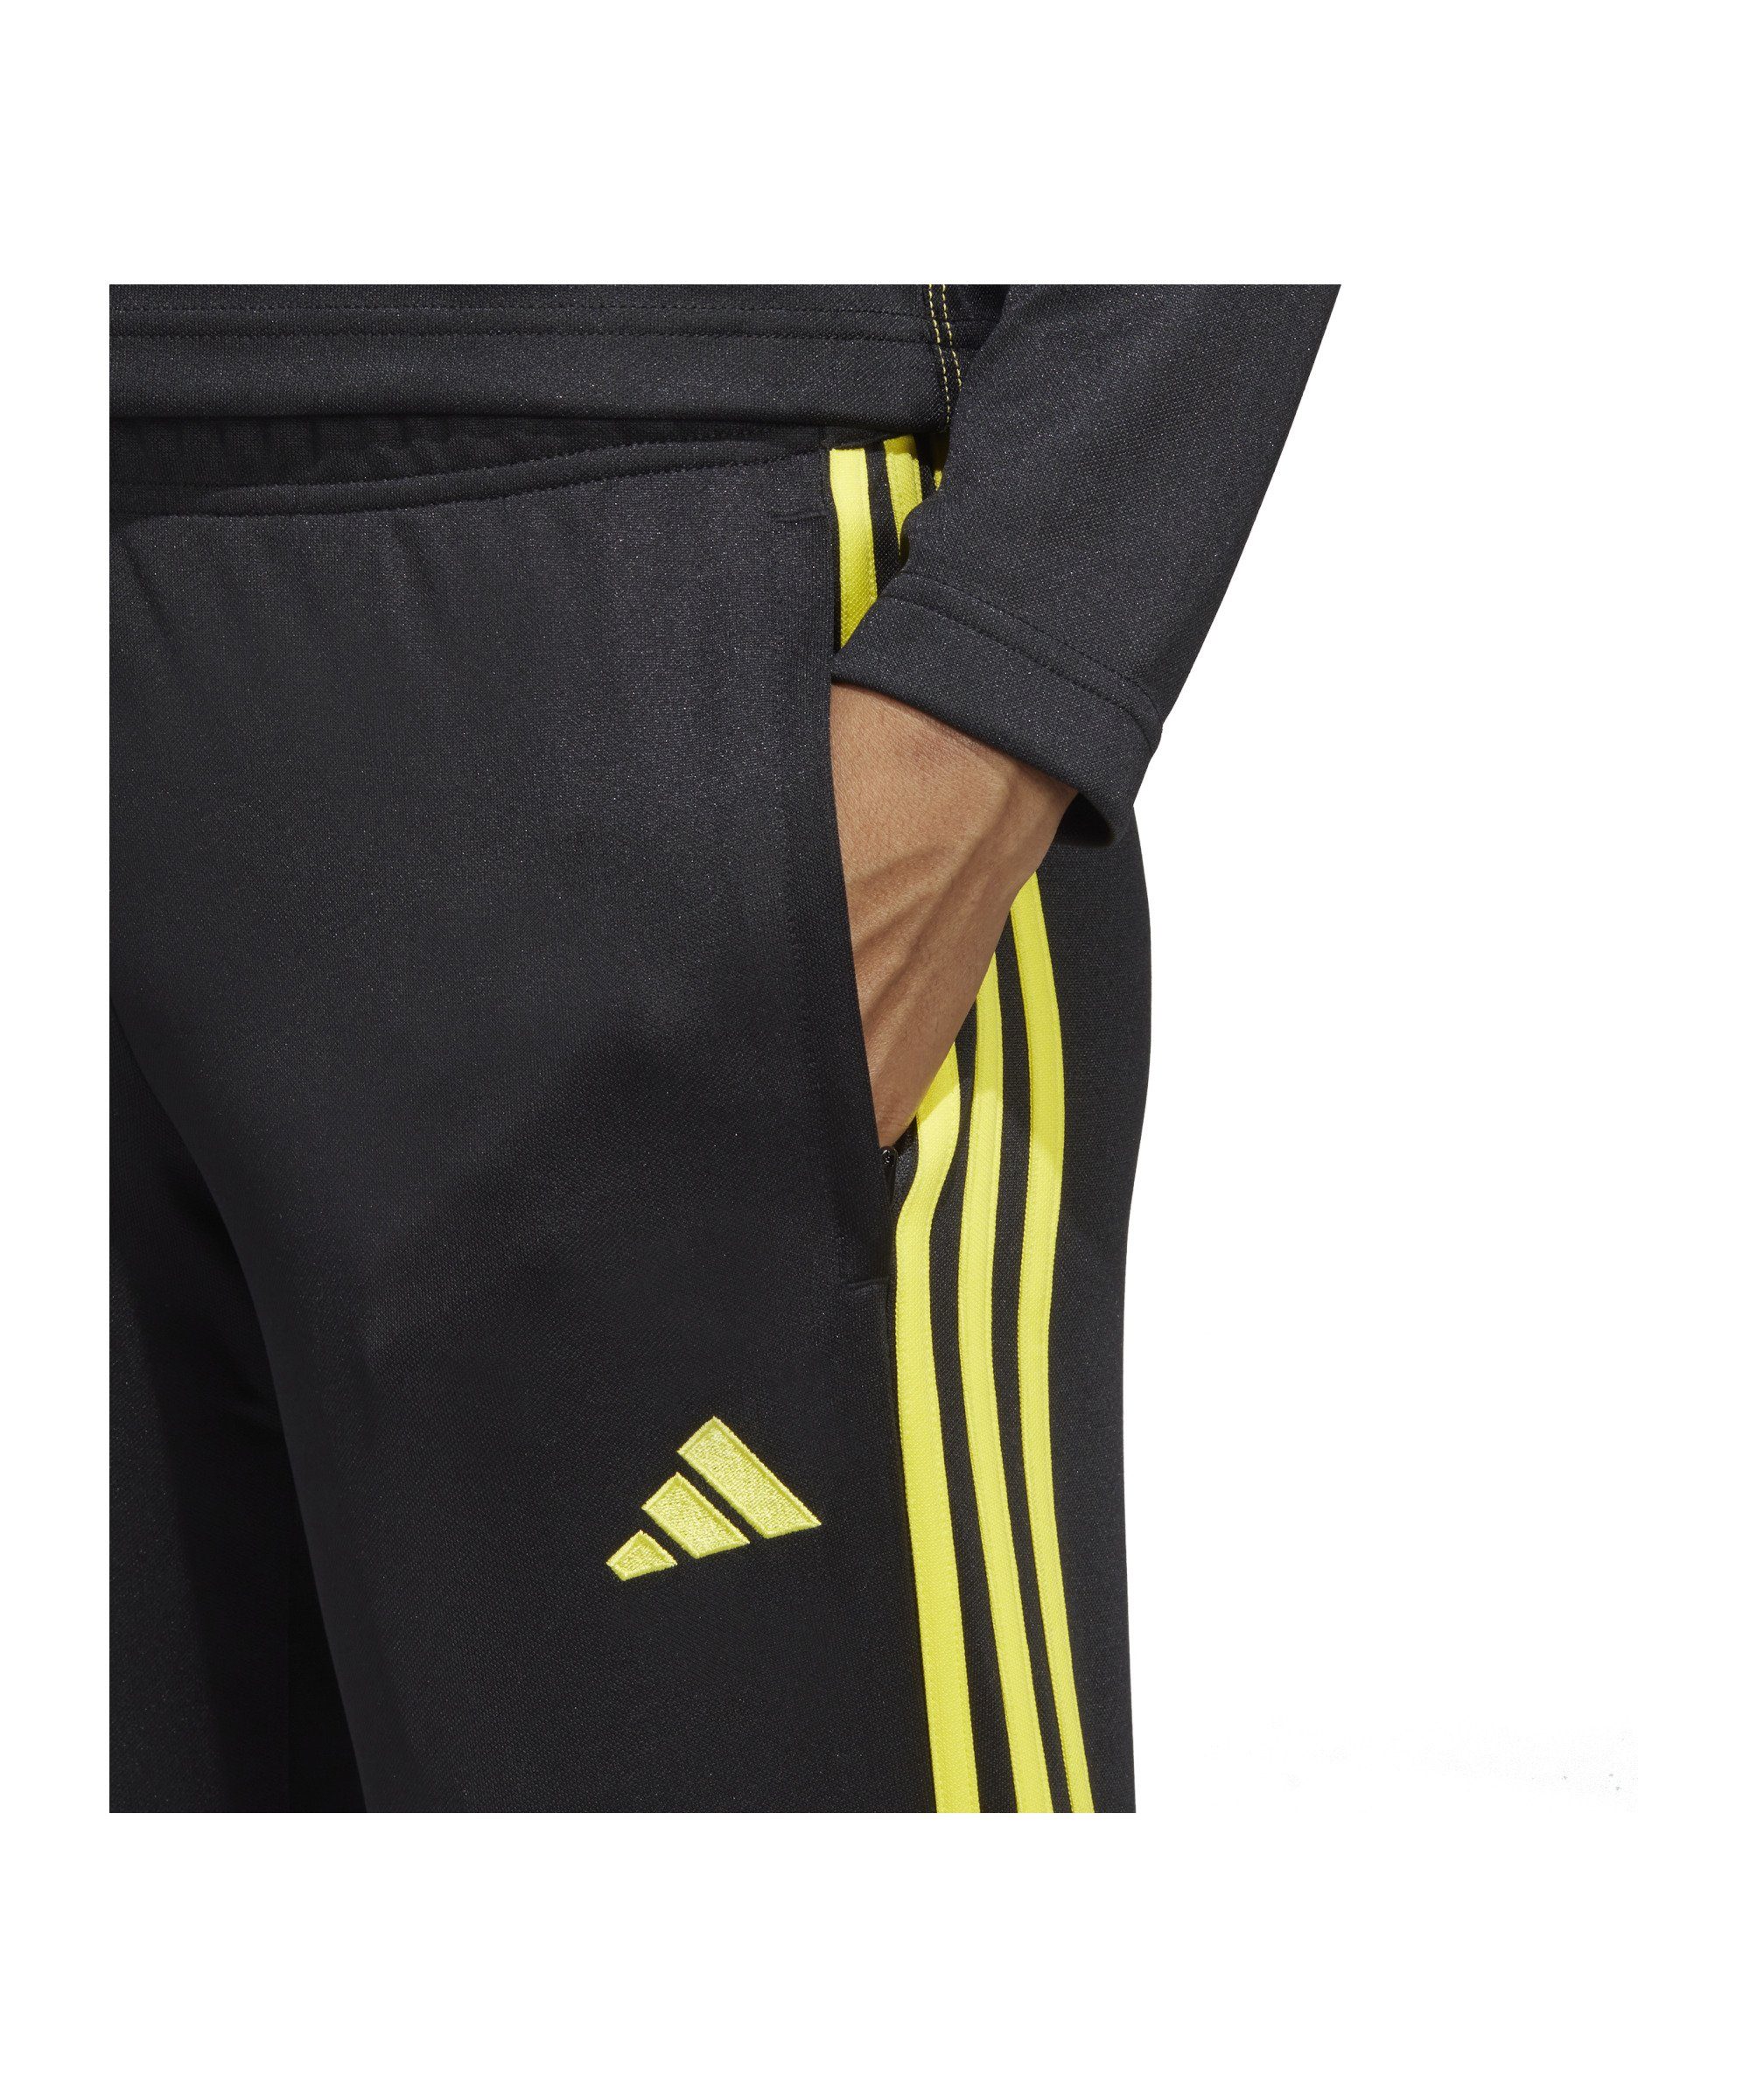 23 Club Tiro Damen Performance Trainingshose schwarzgelb Sporthose adidas